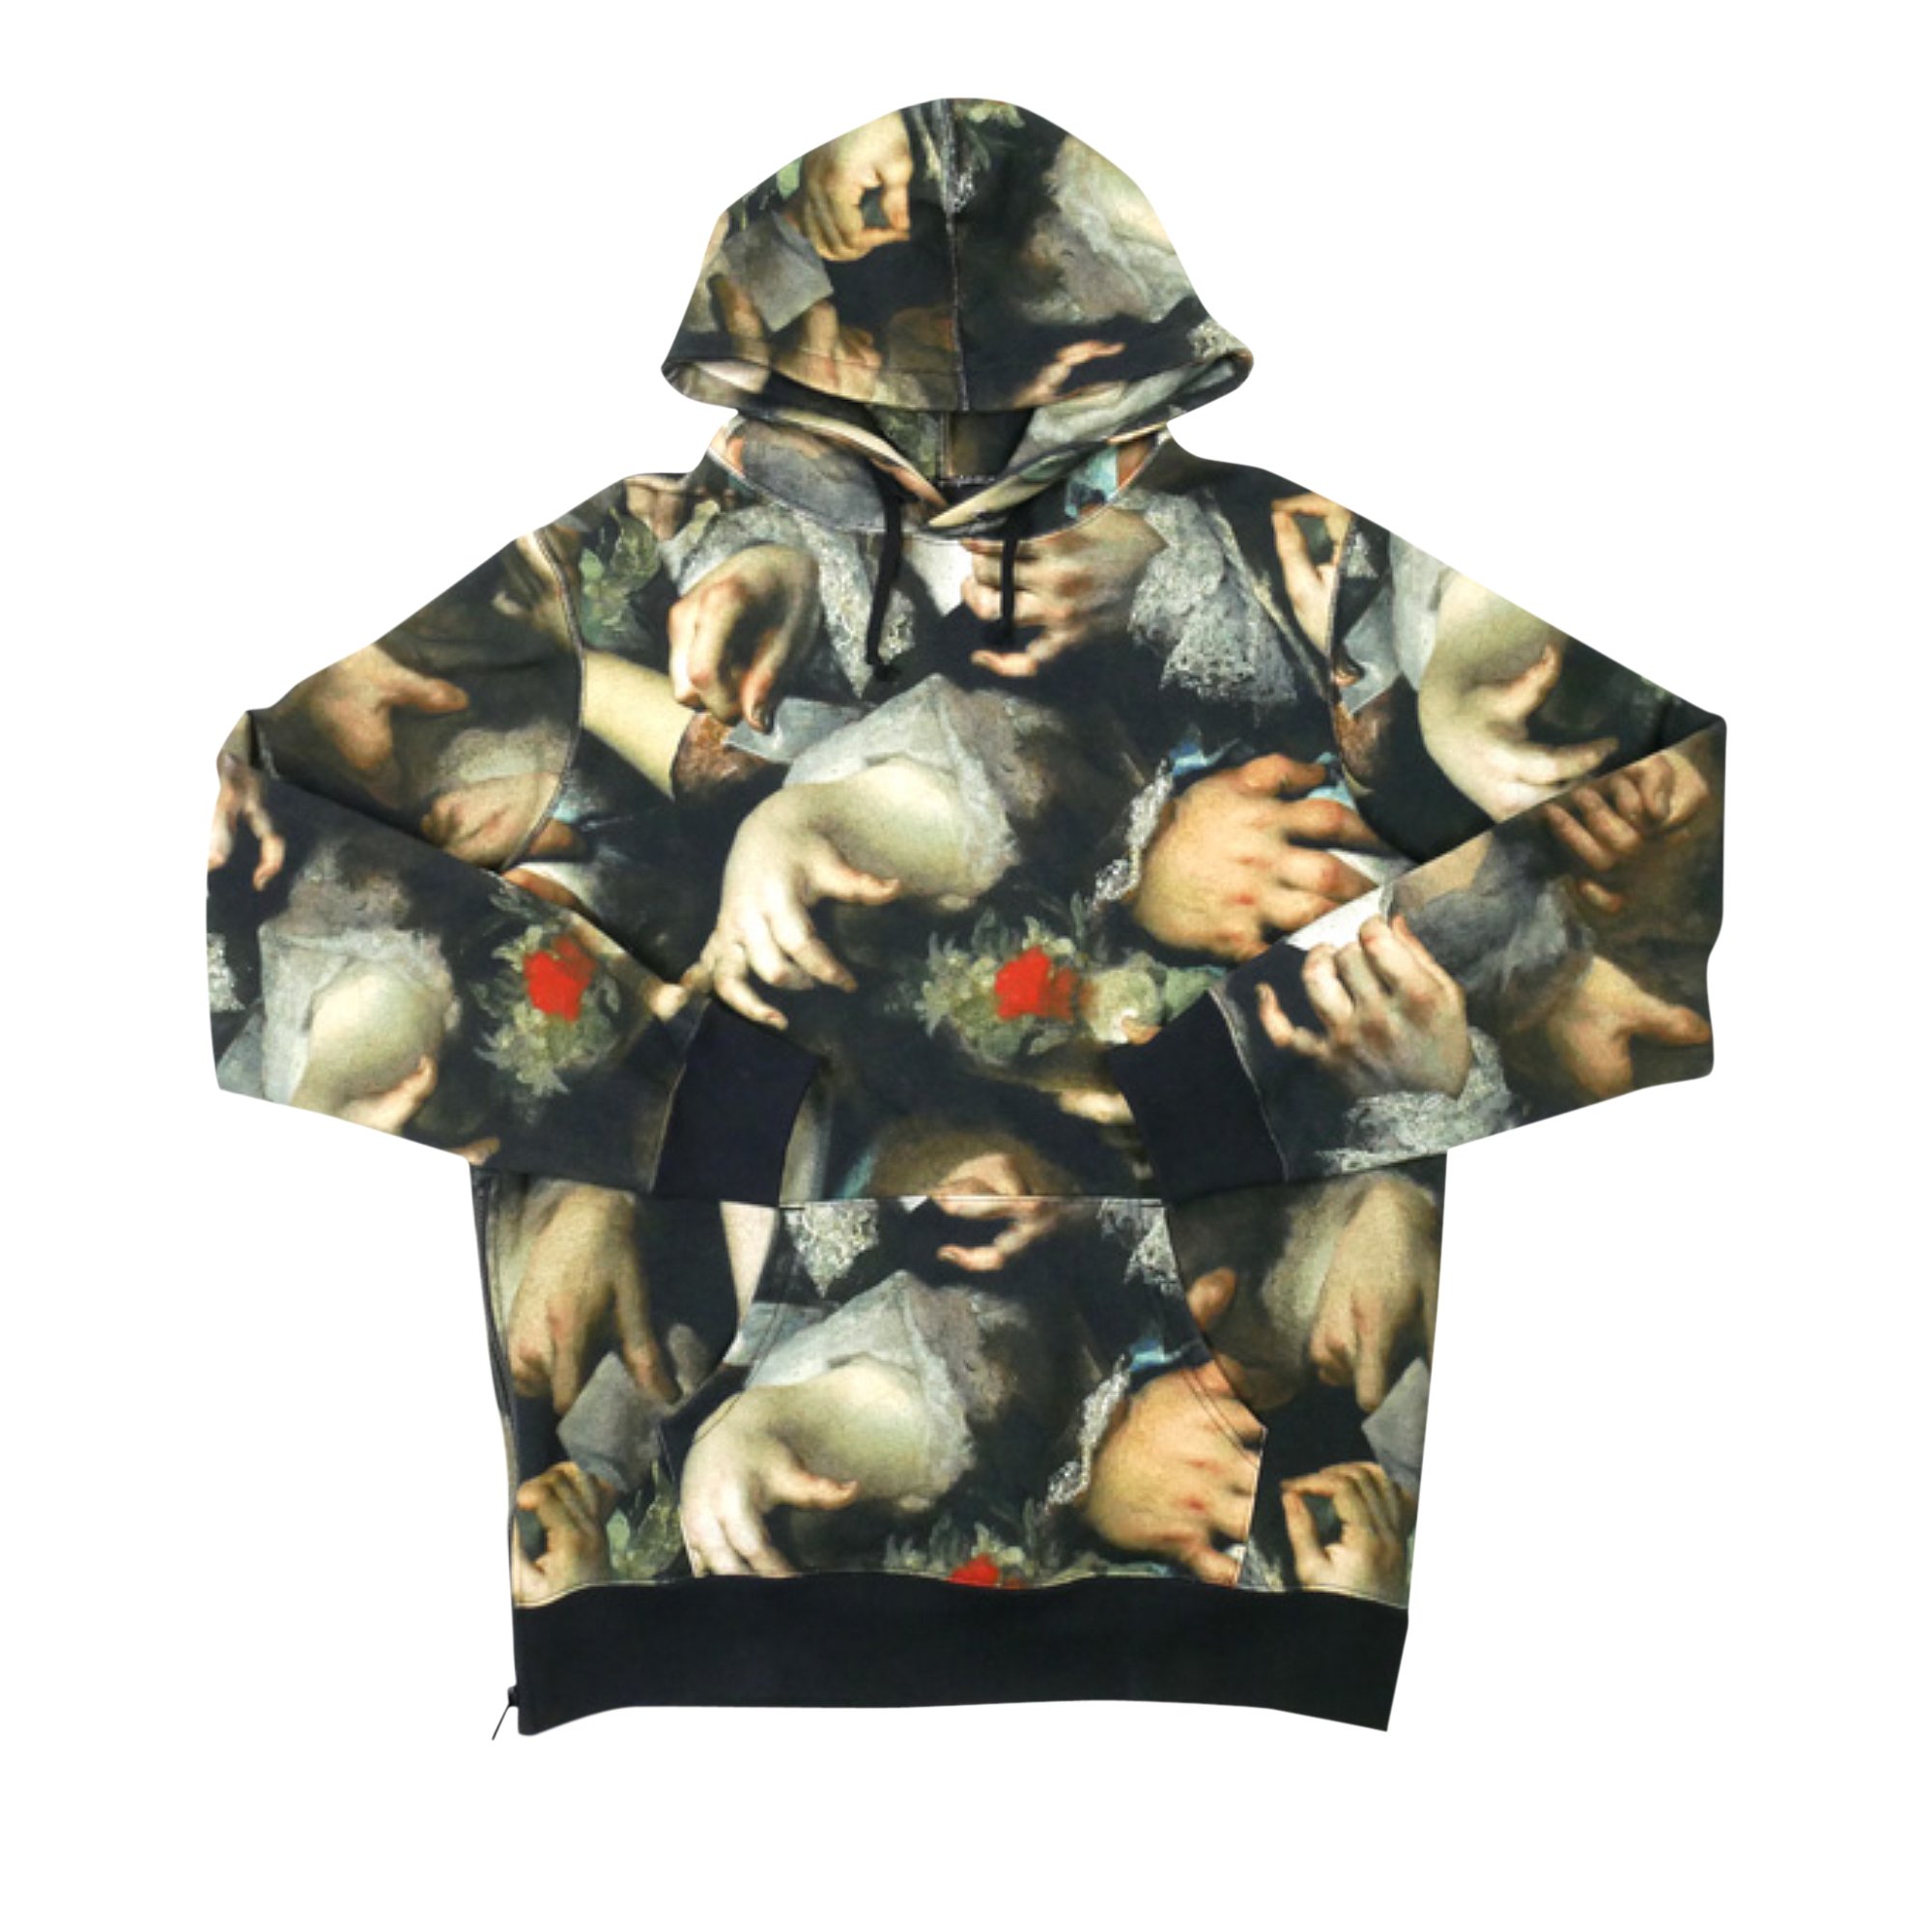 Buy Supreme x Undercover Hooded Sweatshirt 'Black' - SS15SW6 BLACK